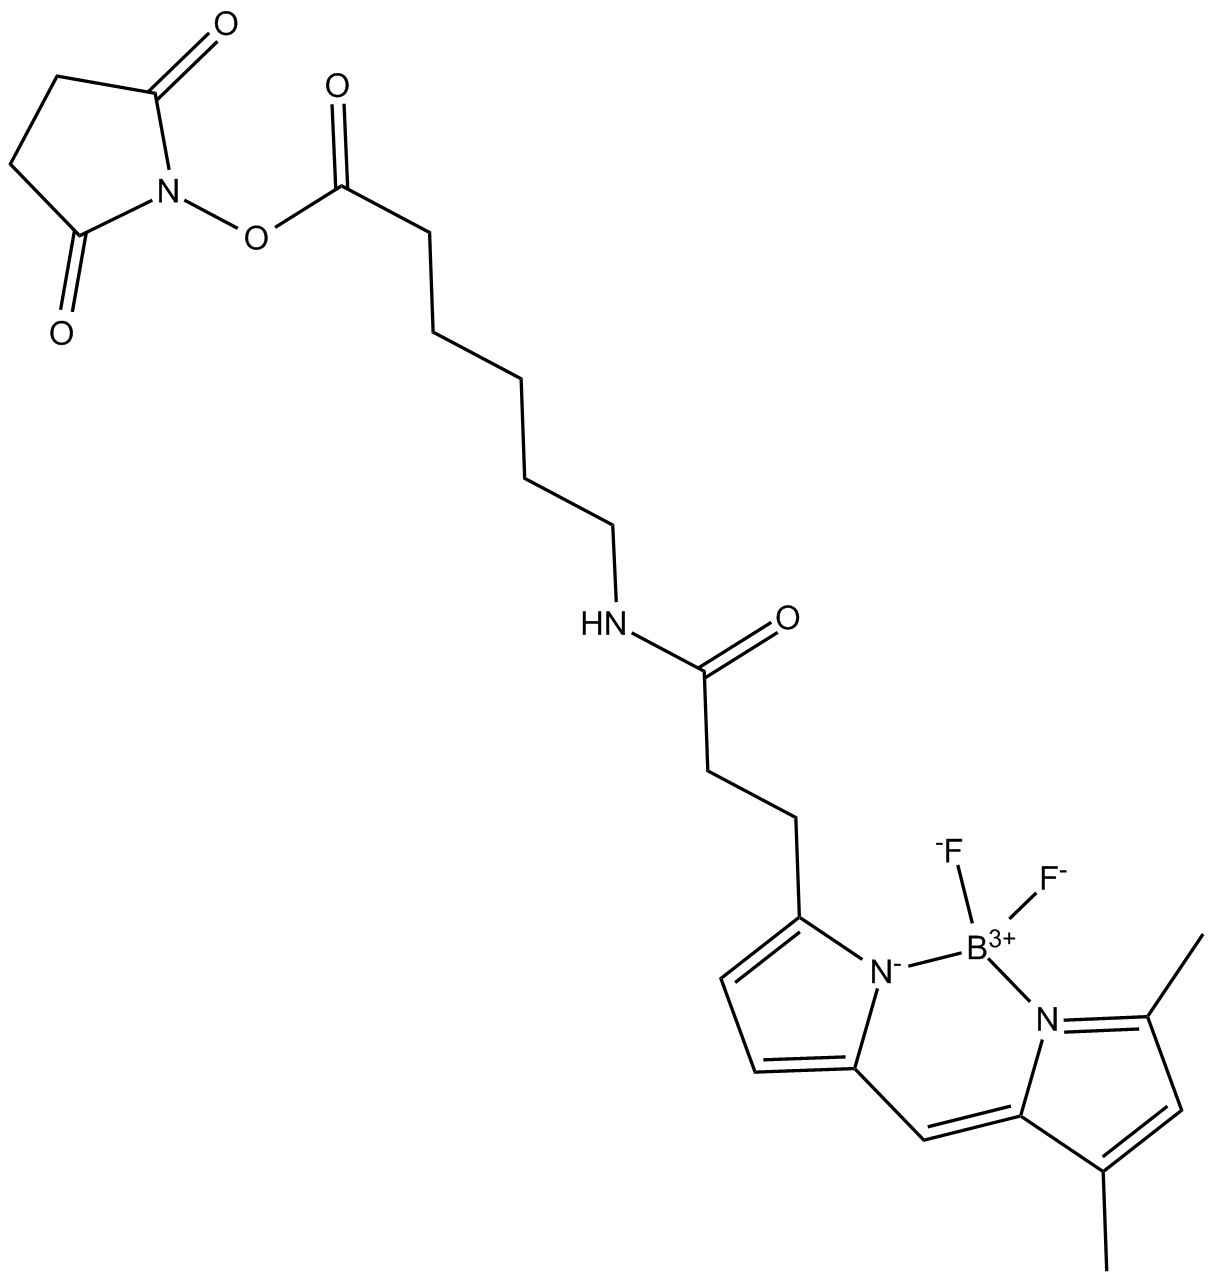 3-BODIPY-propanoylaminocaproic Acid N-hydroxysuccinimide ester